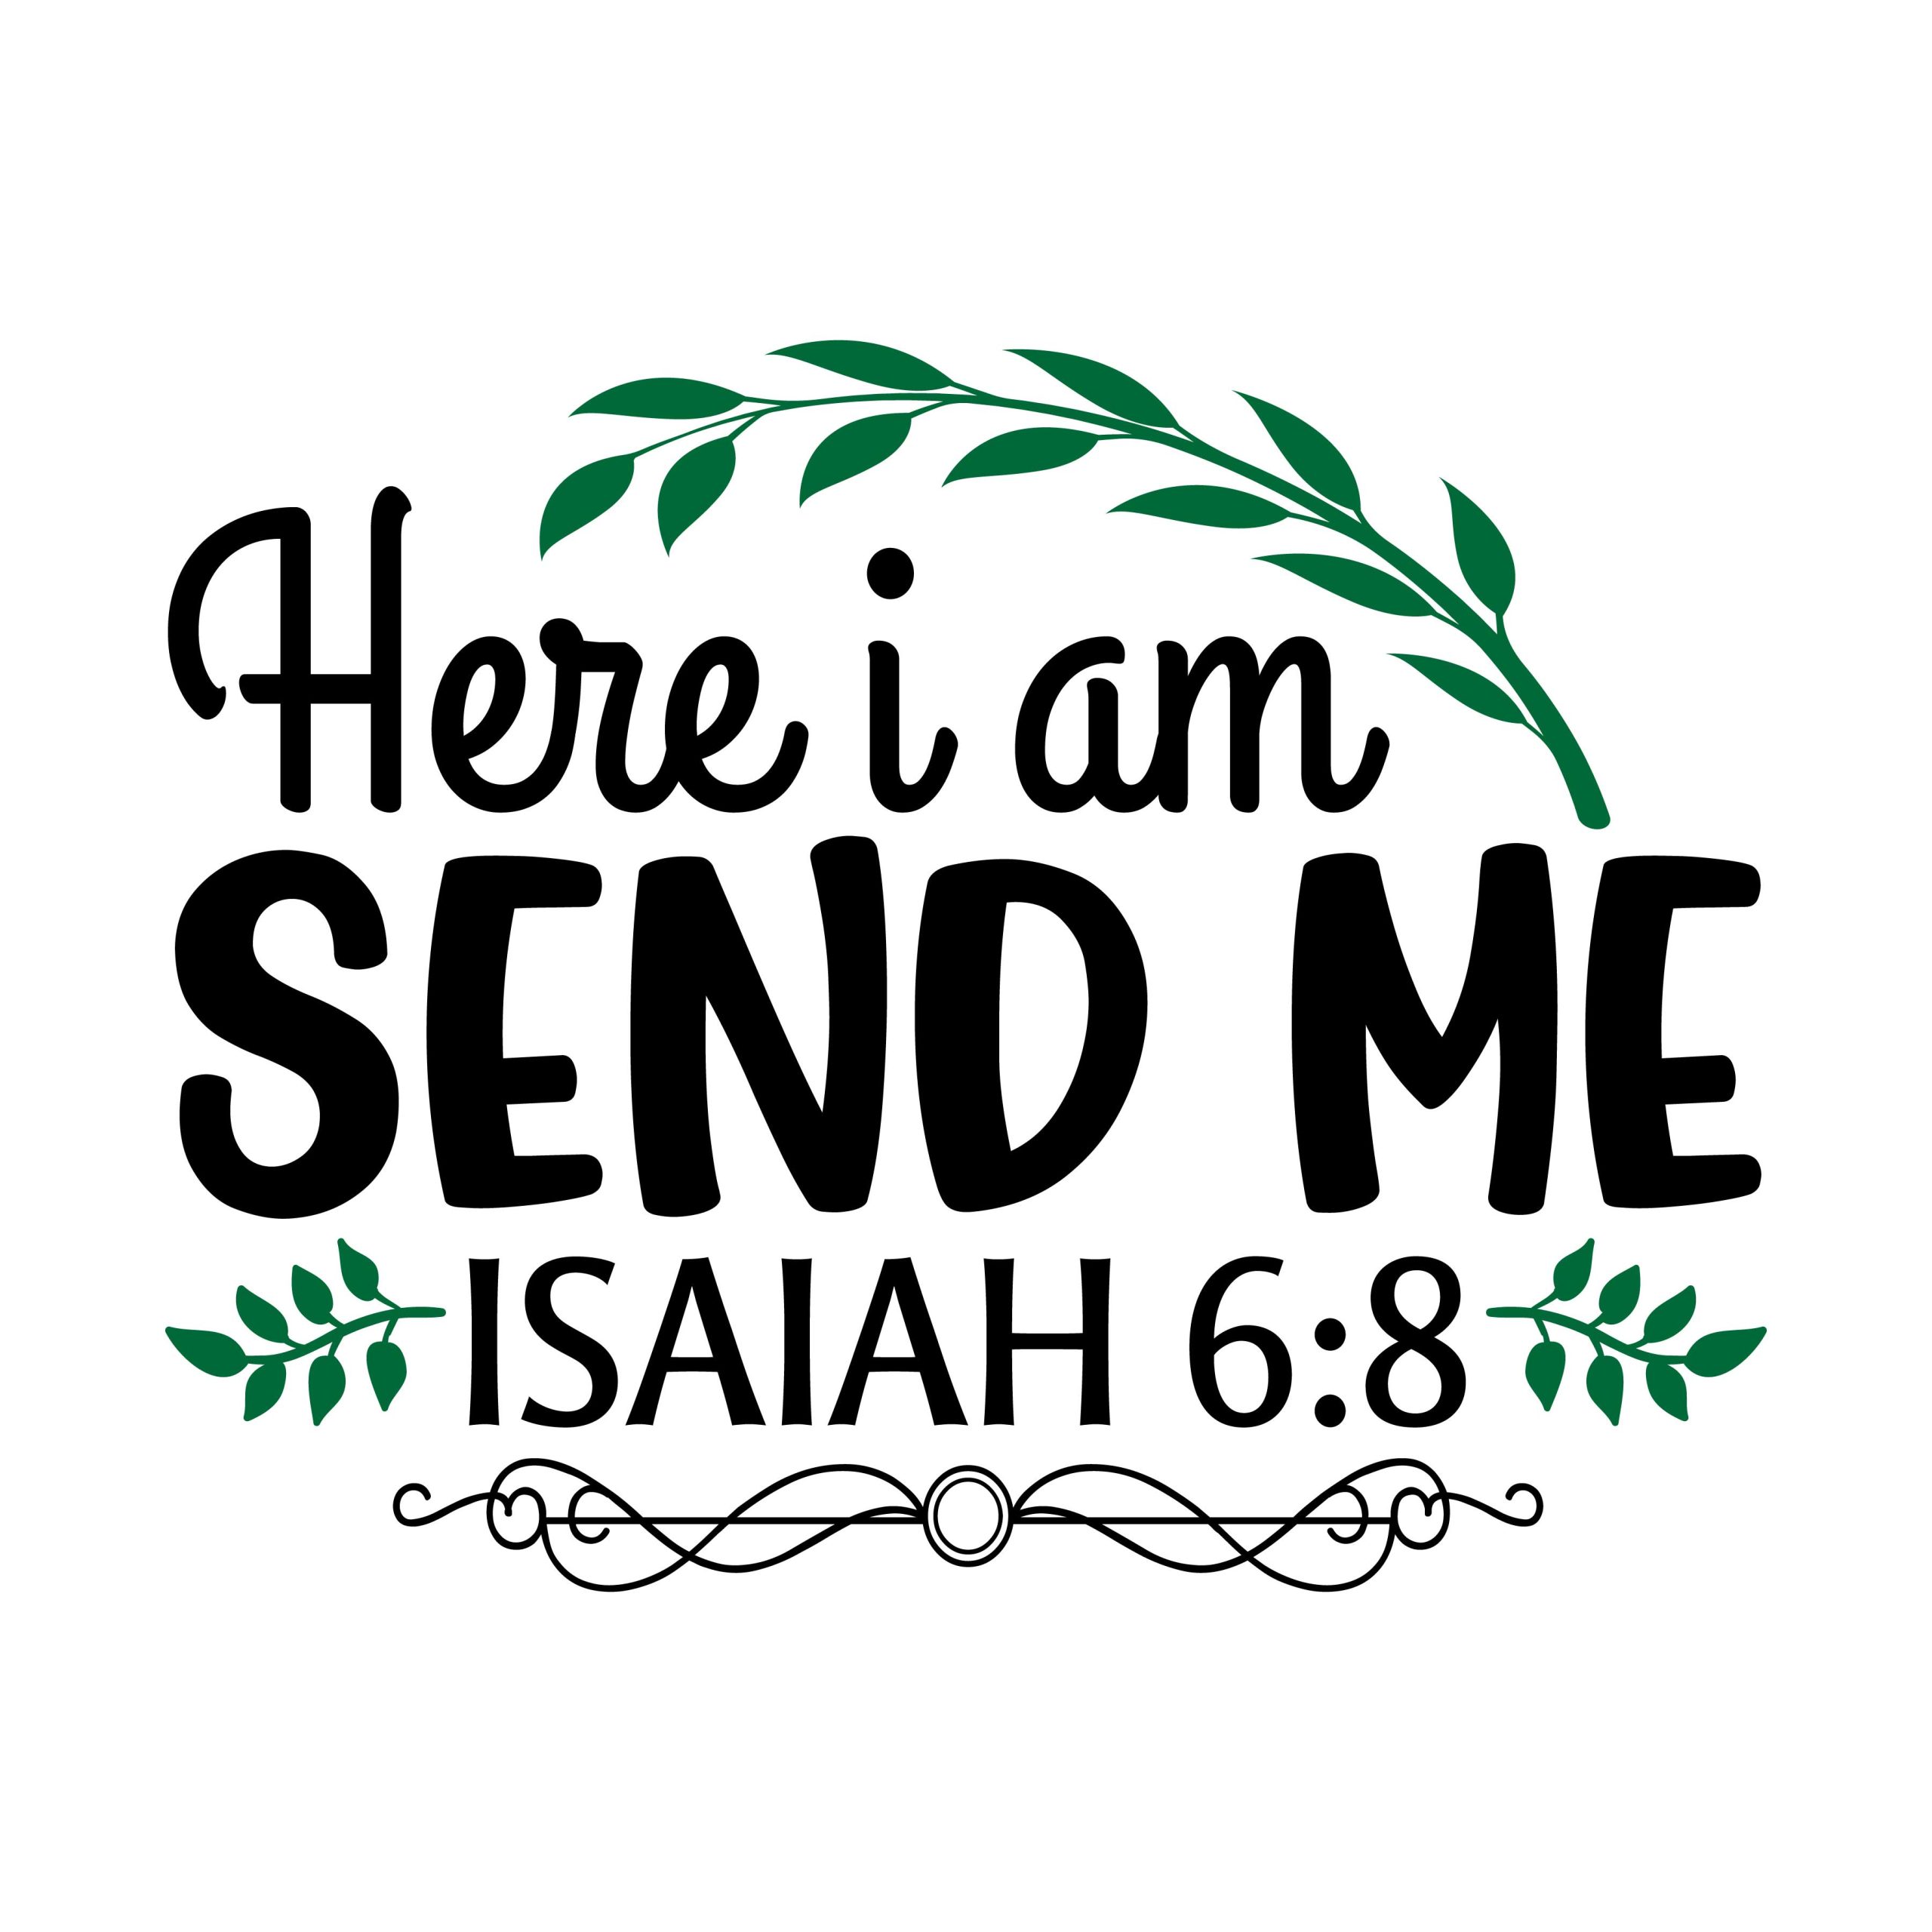 Here i am send me Isaiah 6:8 , bible verses, scripture verses, svg files, passages, sayings, cricut designs, silhouette, embroidery, bundle, free cut files, design space, vector